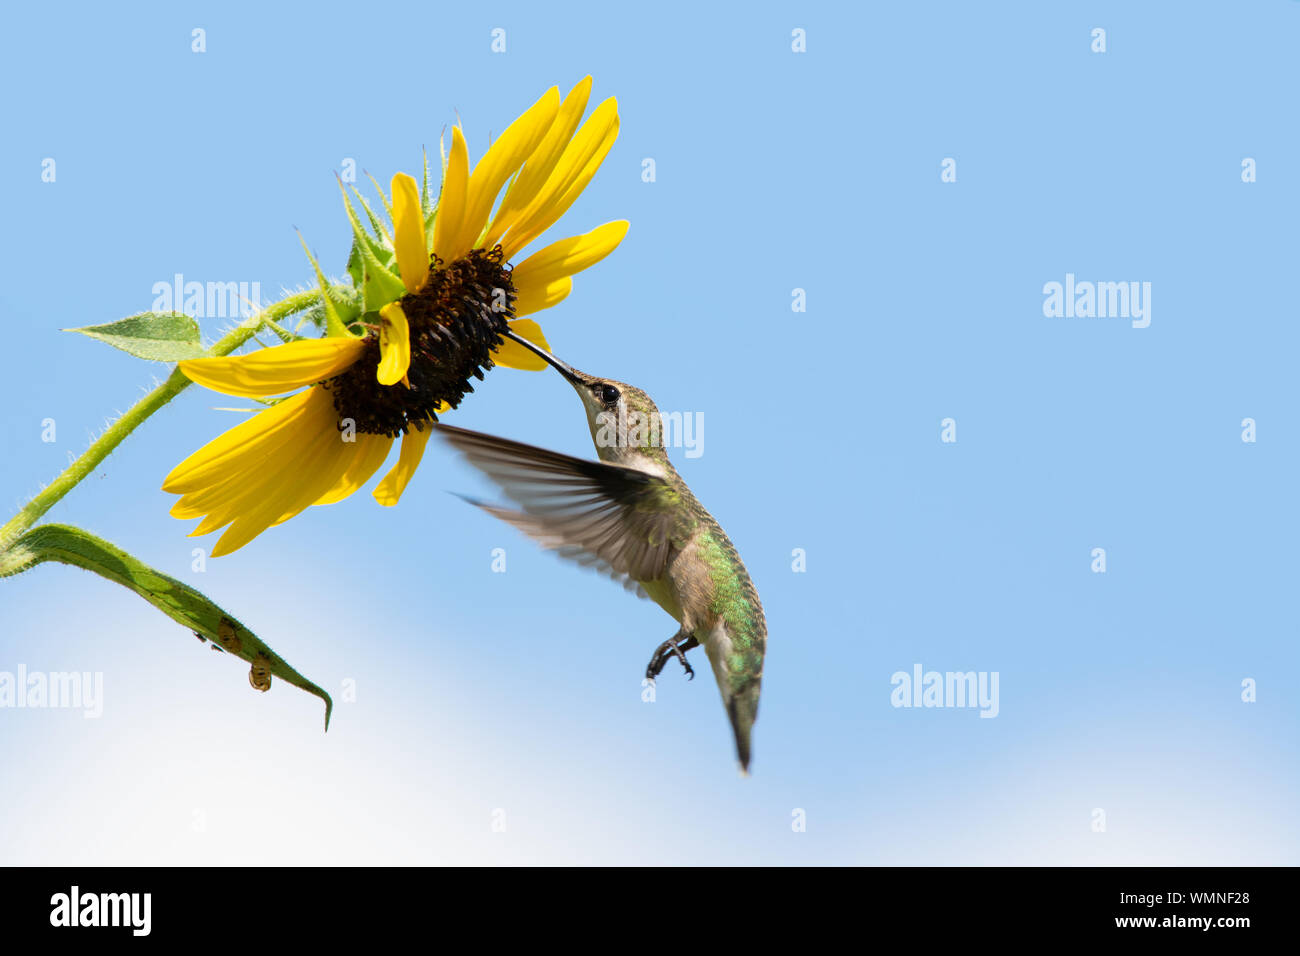 Ruby-throated Hummingbird feeding on a Sunflower in flight Stock Photo